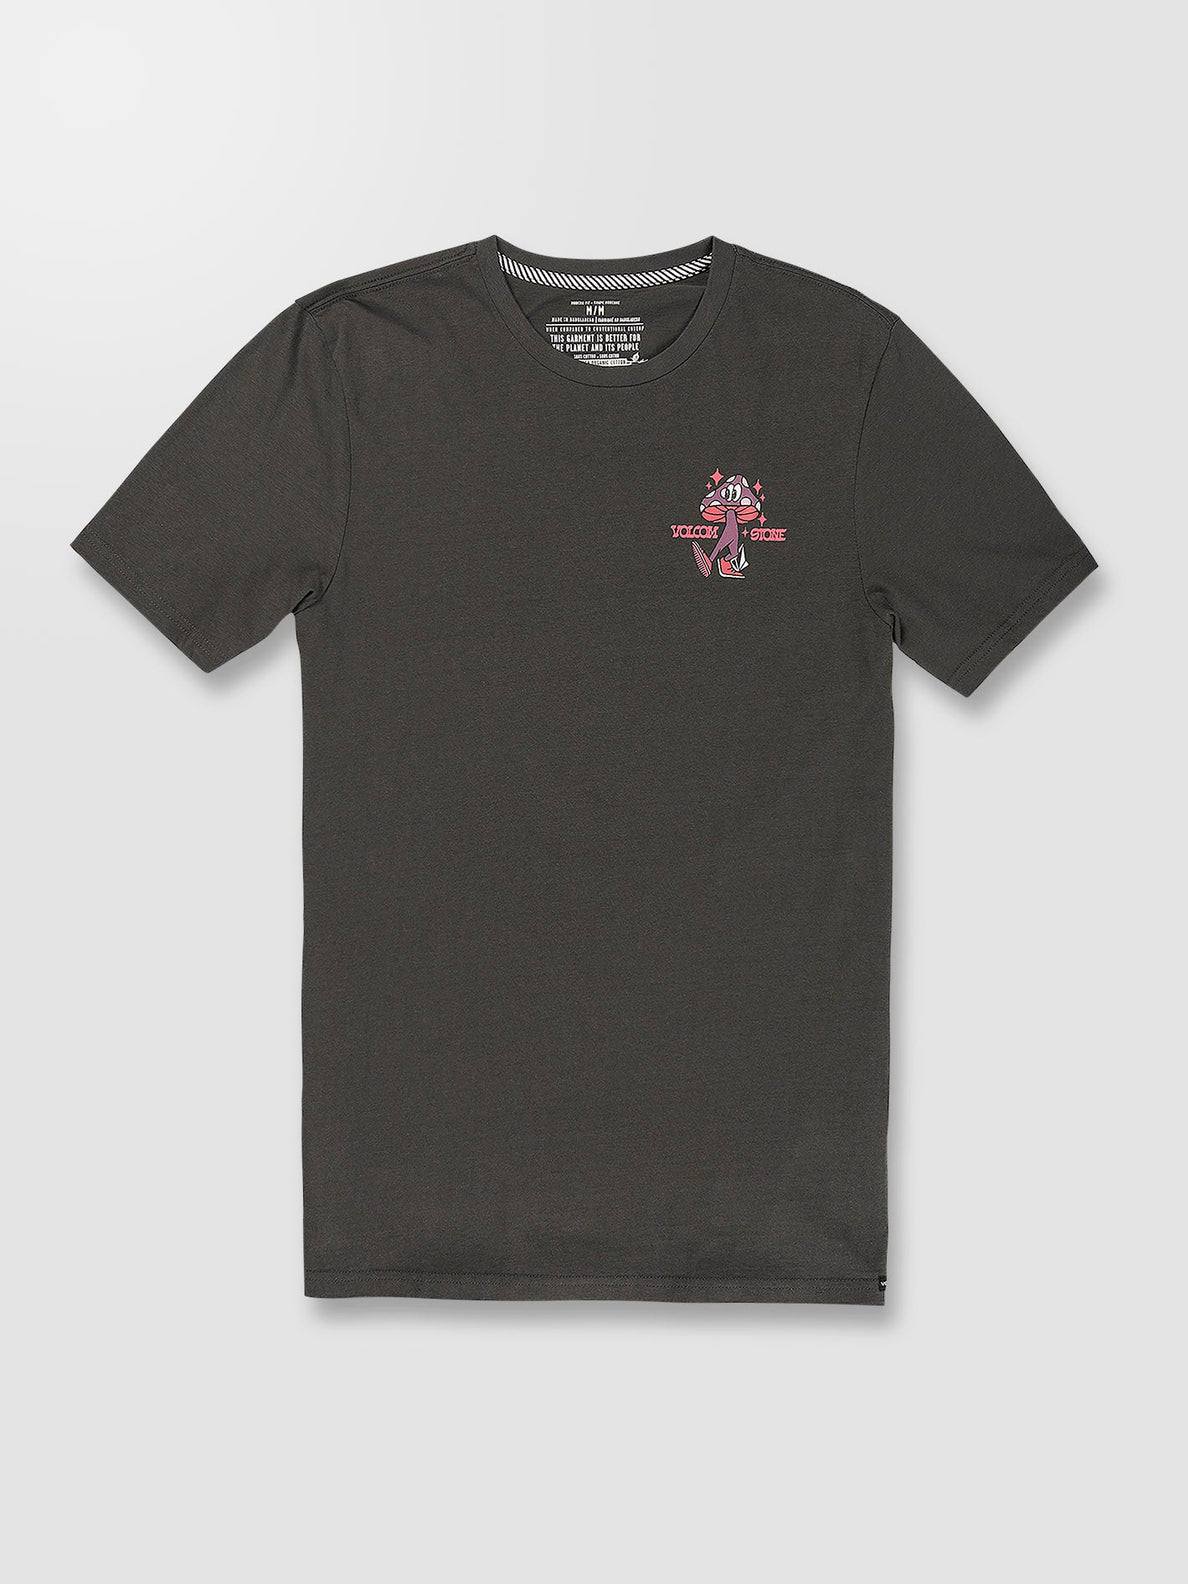 Mr Liberty T-shirt - RINSED BLACK (A5032205_RIB) [10]